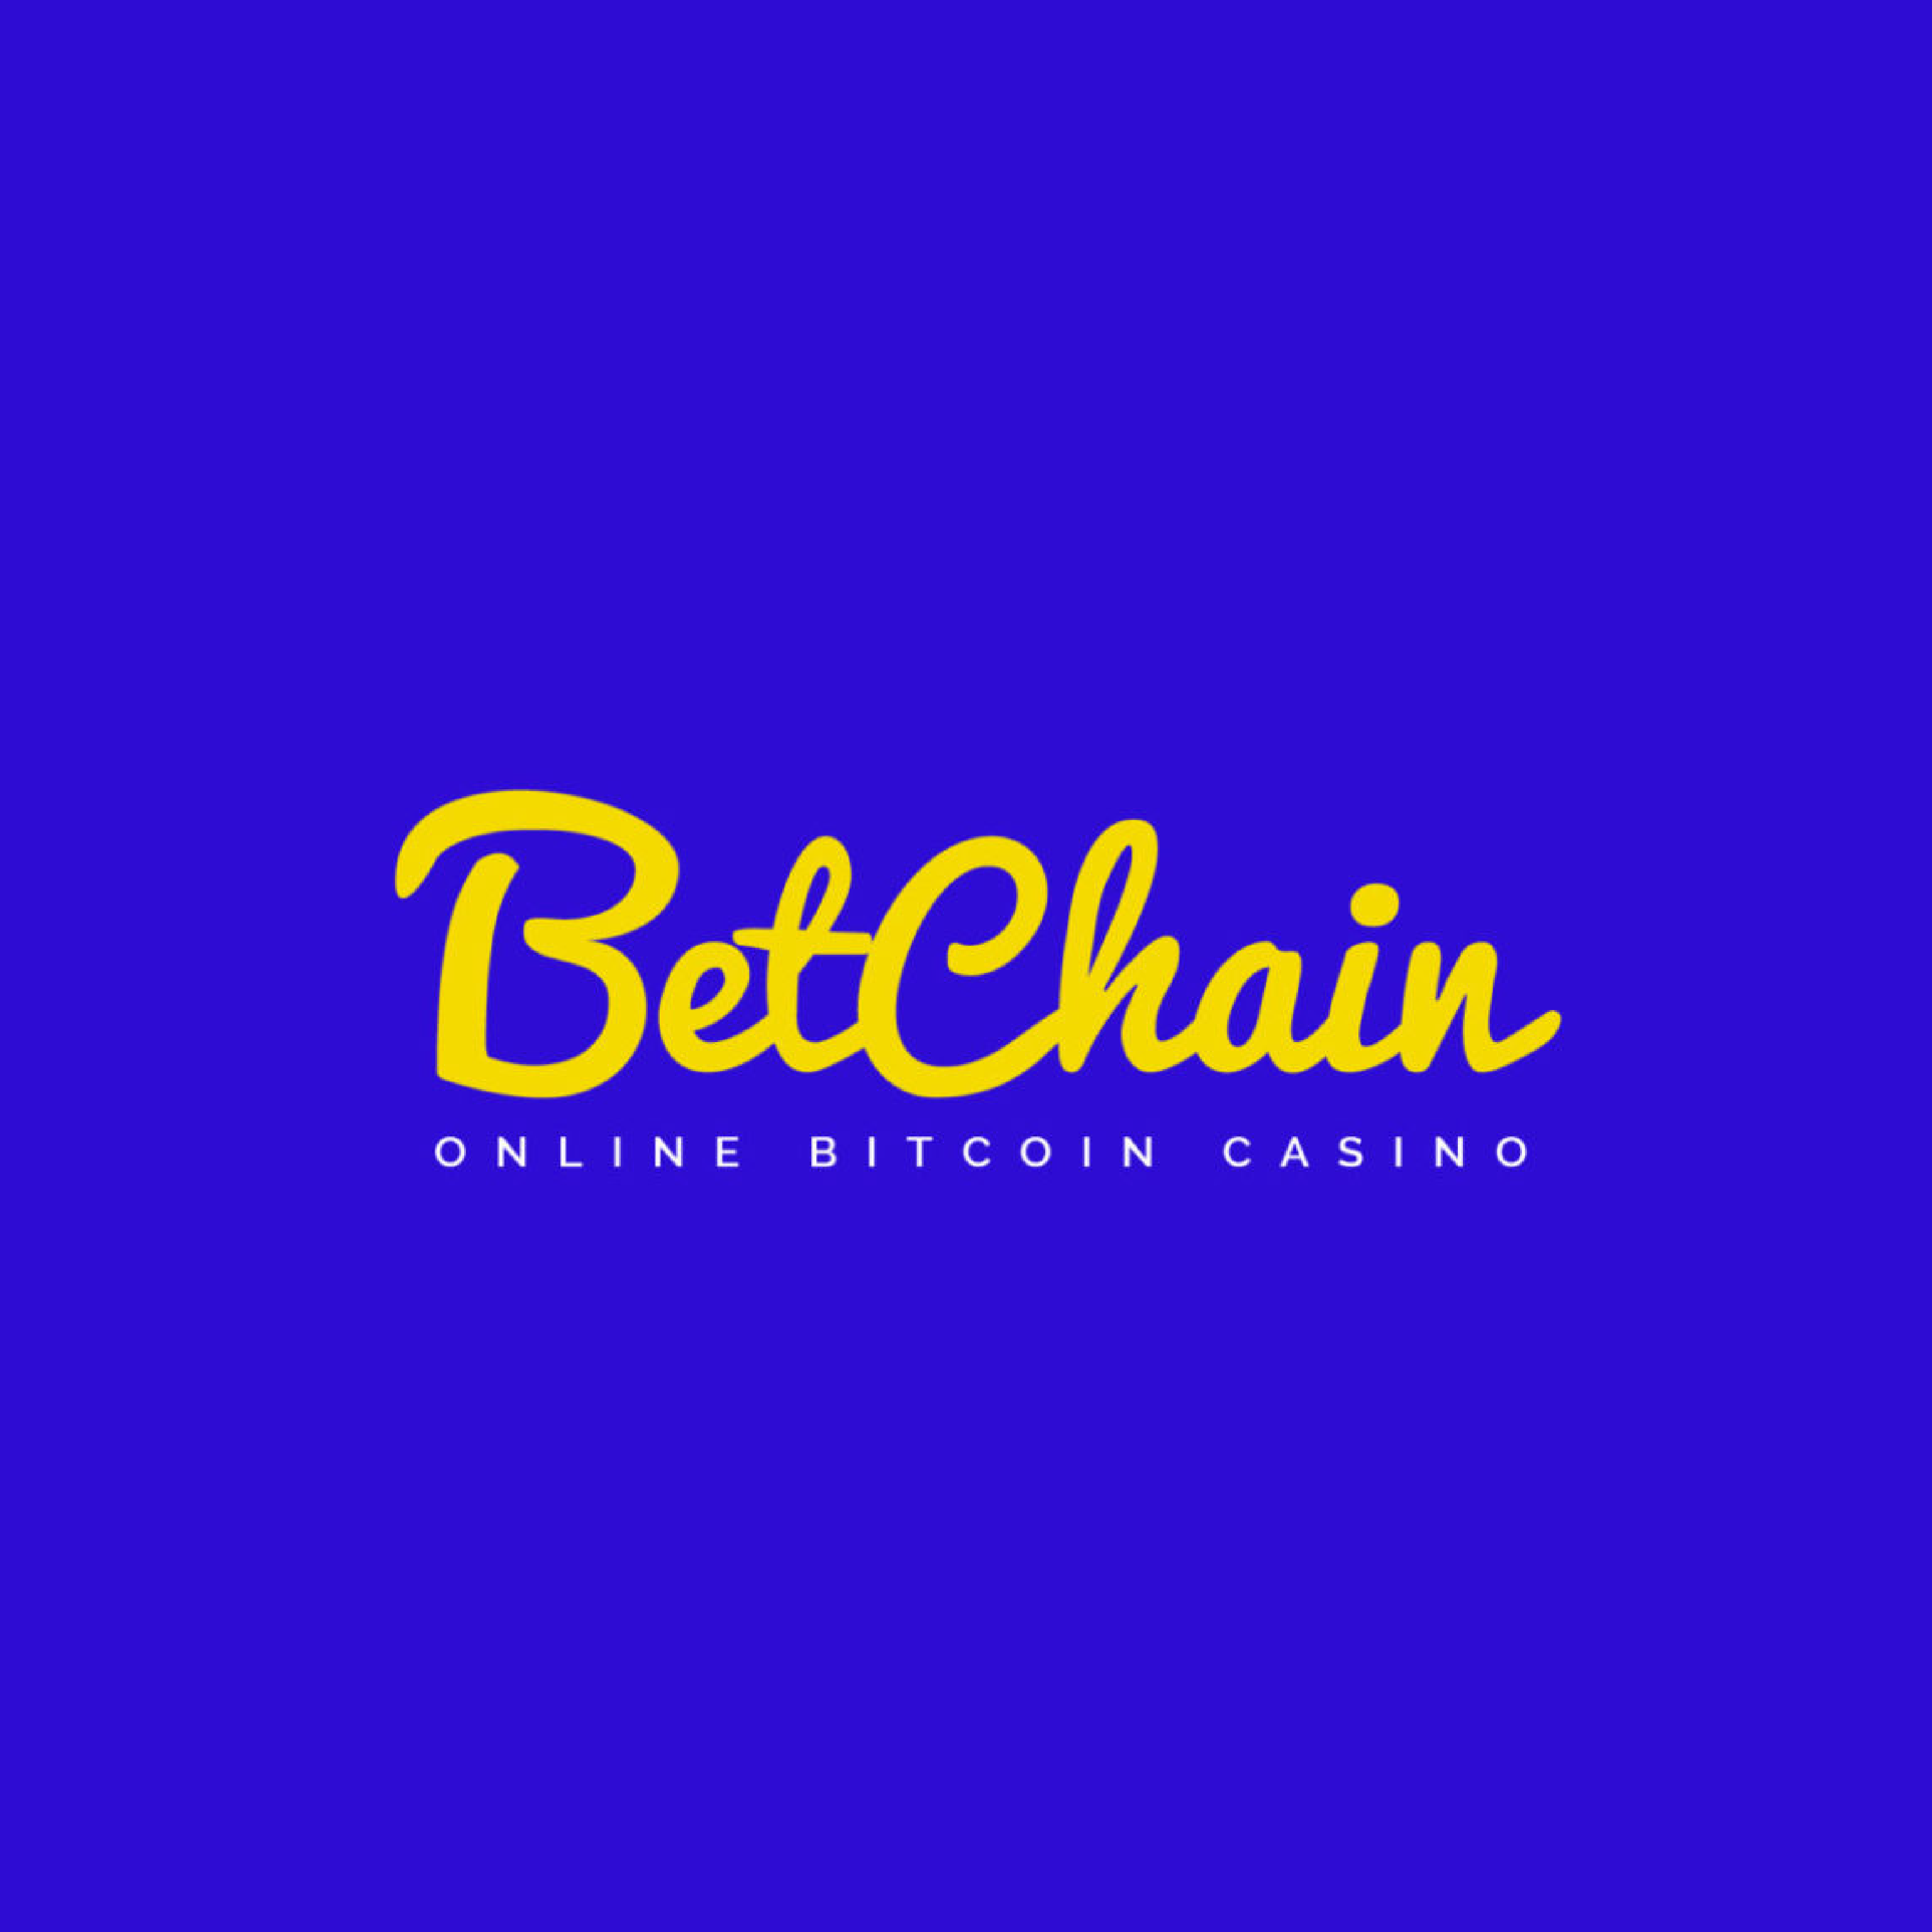 Play you bitcoin casino